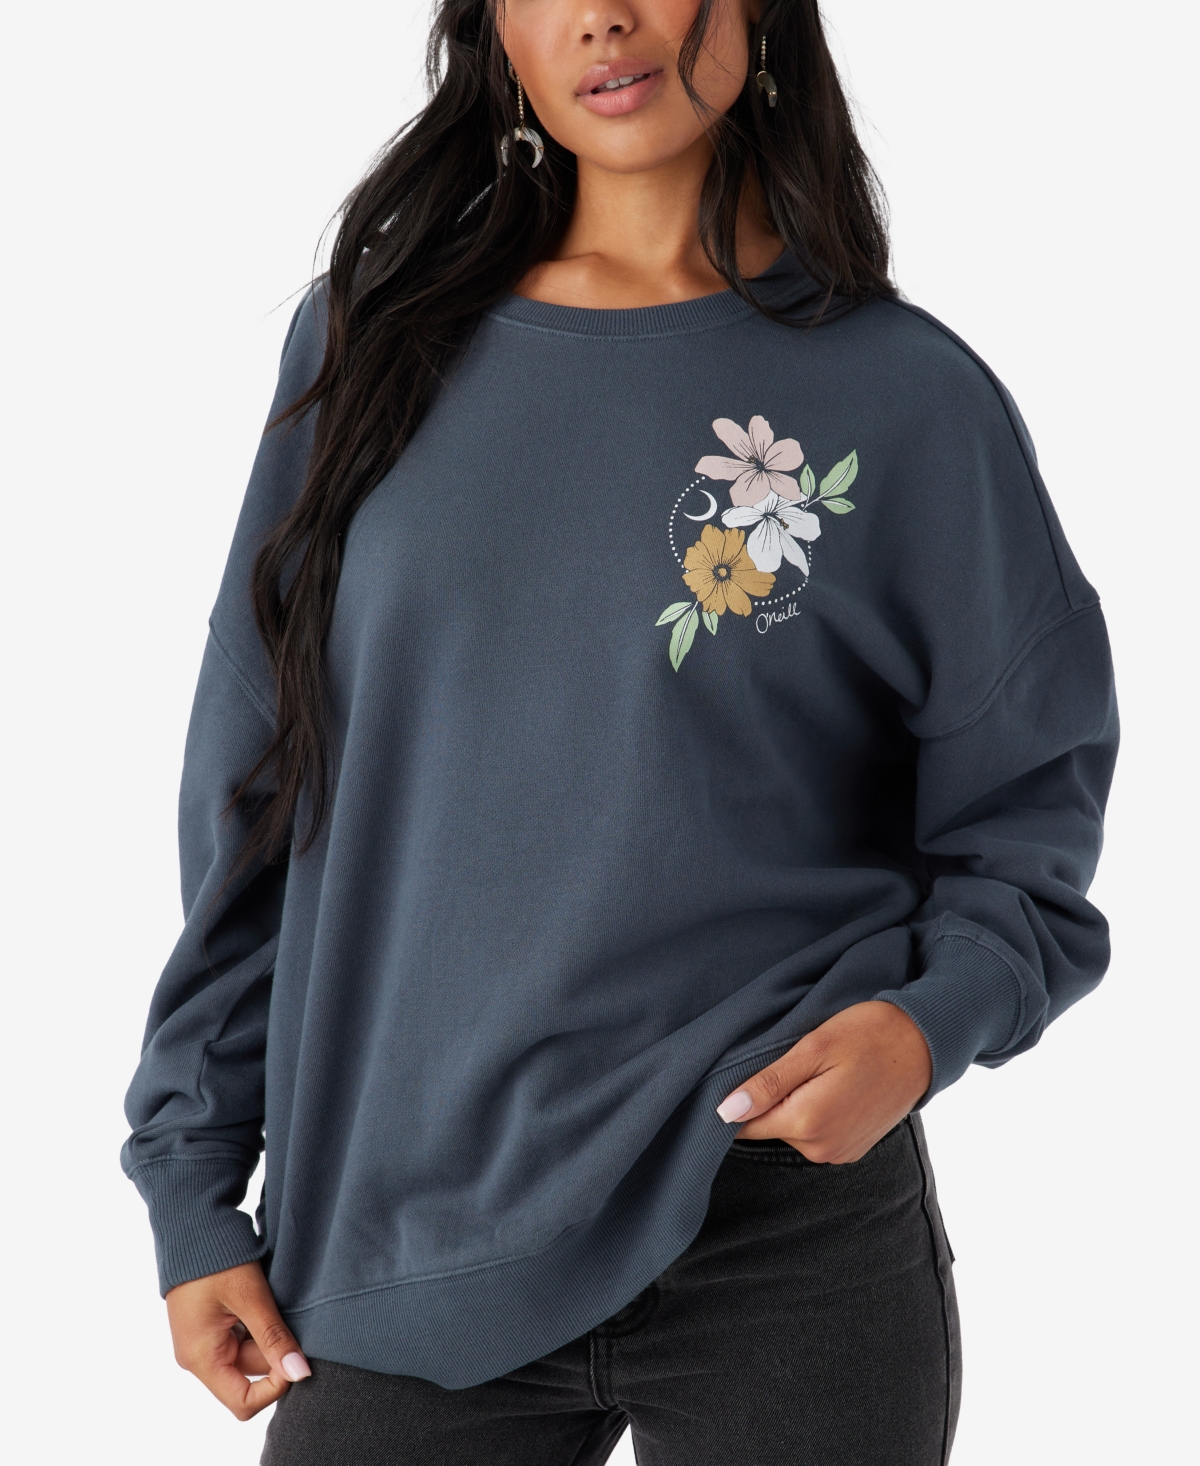 O'neill Juniors' Choice Fleece Sweatshirt In Slate